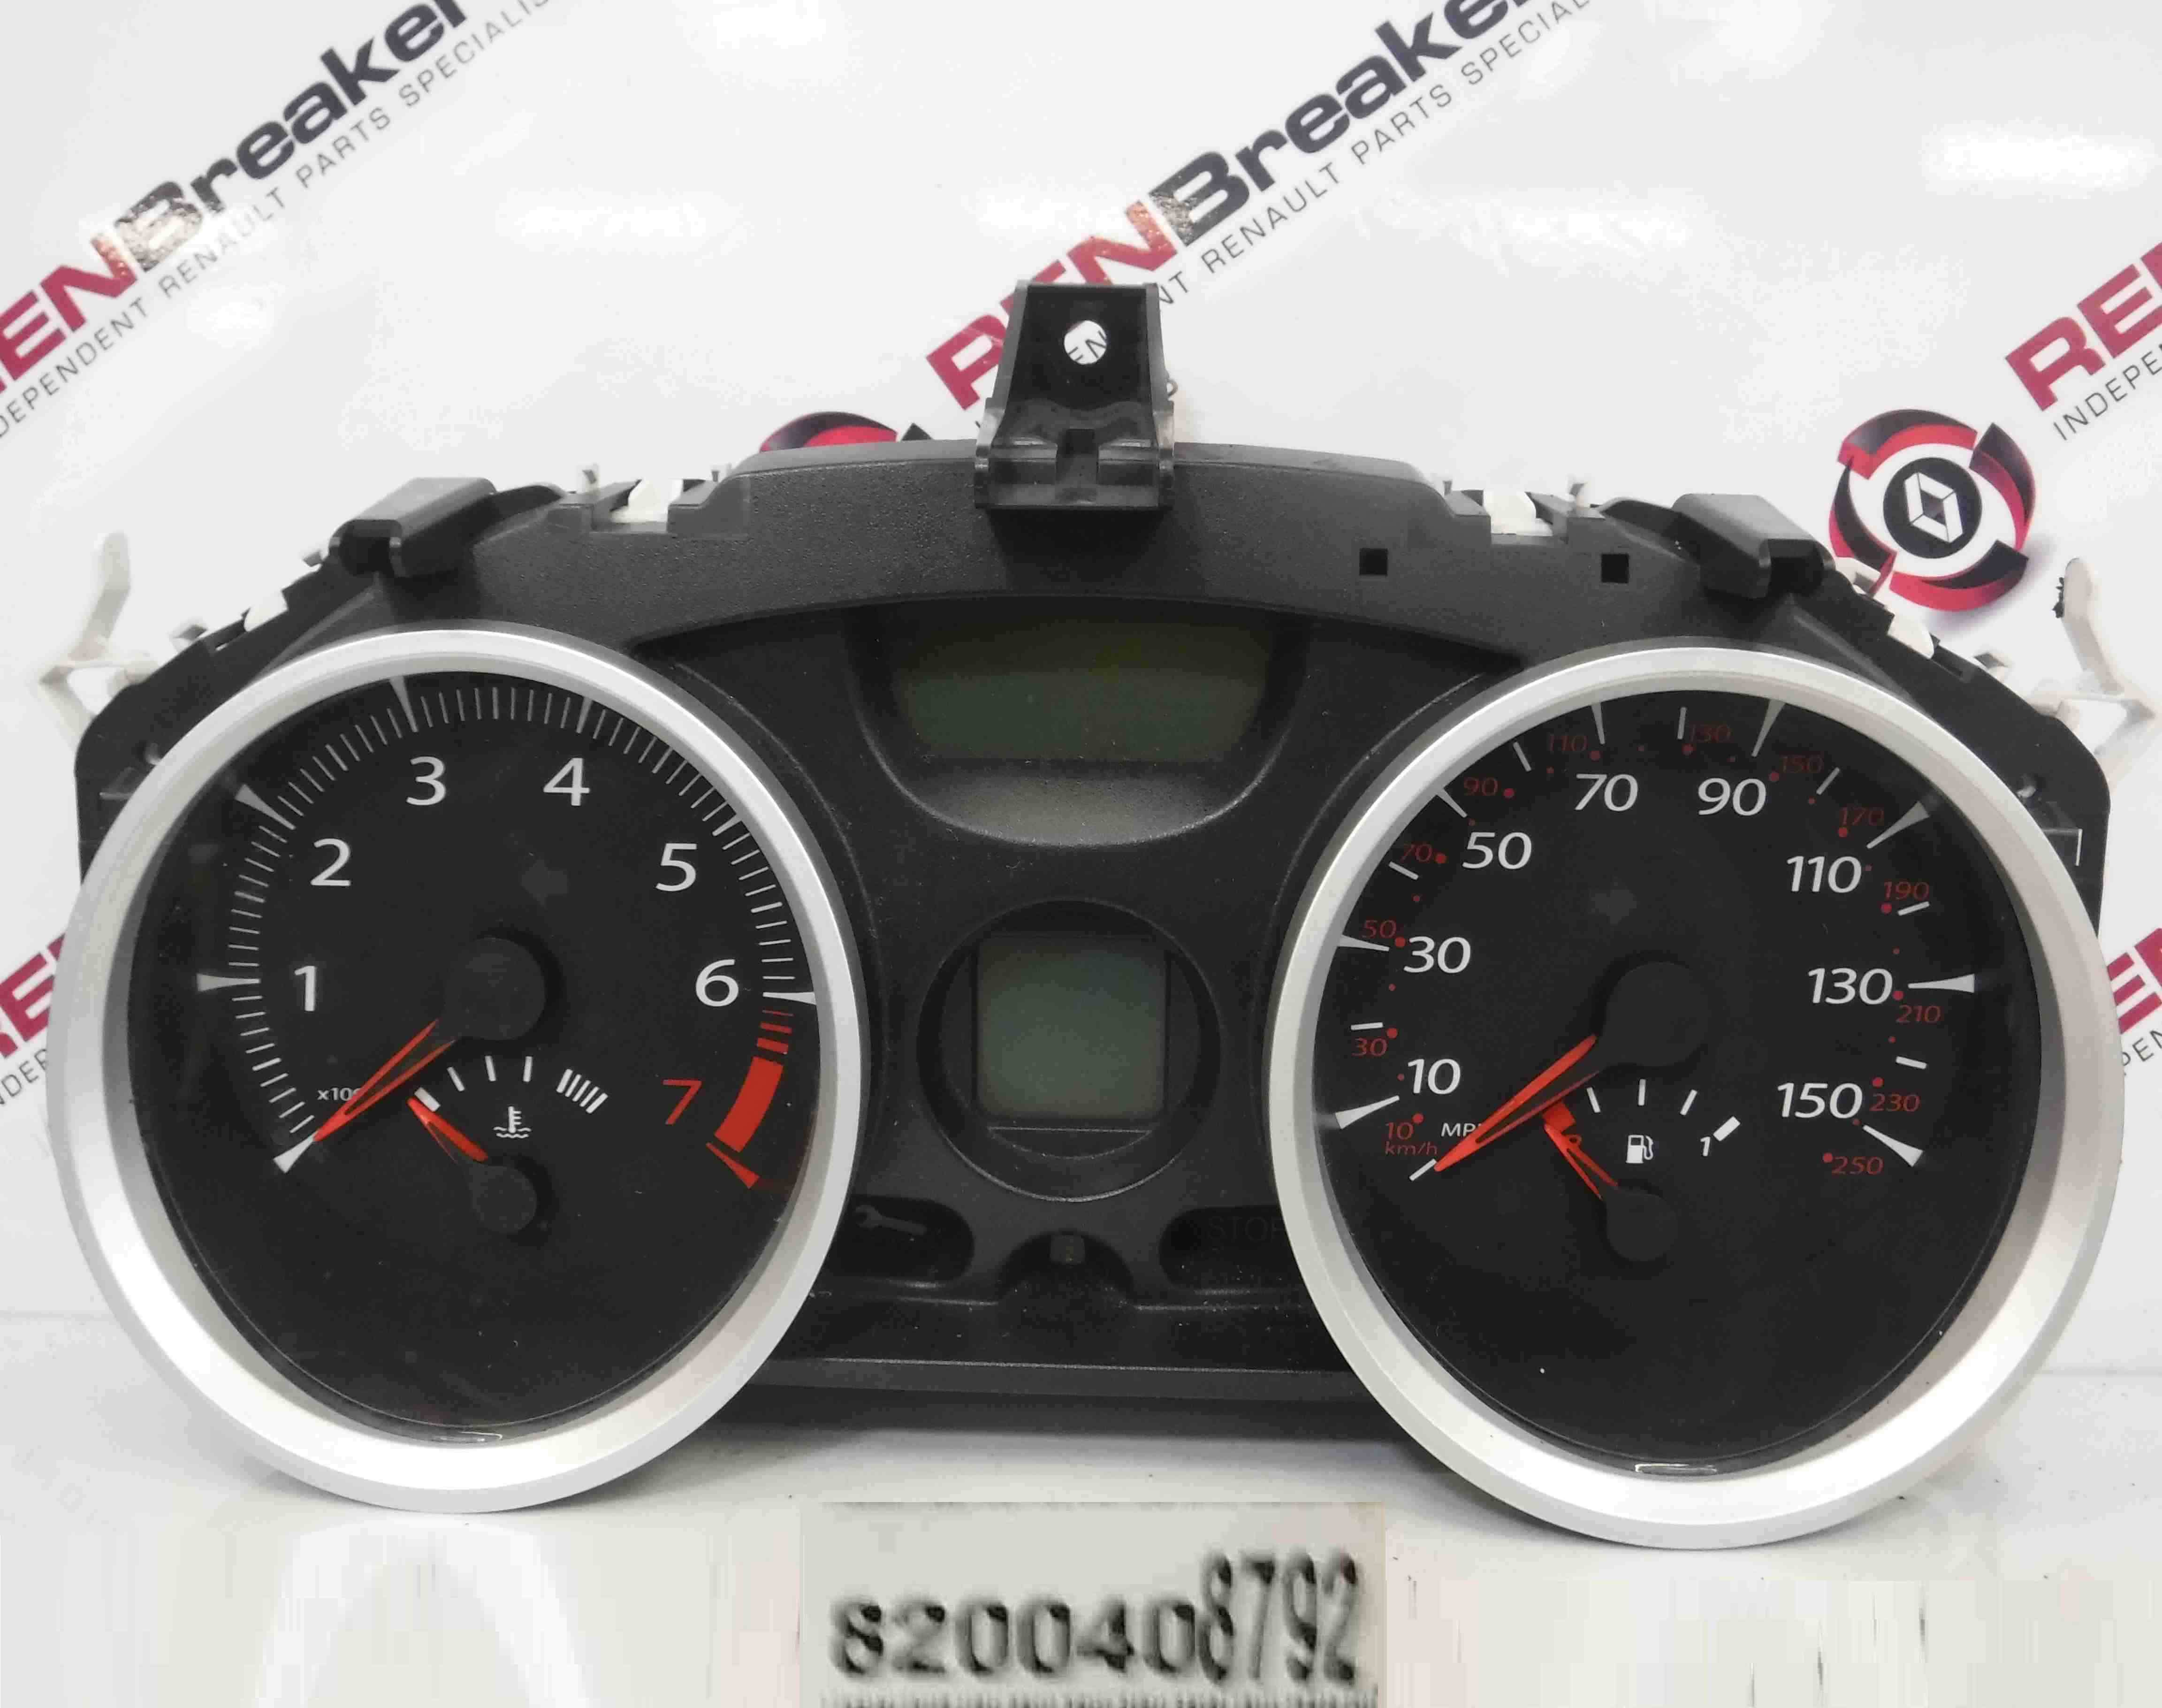 Renault Megane 2006-2008 Instrument Panel Dials Gauges Clocks No Mileage